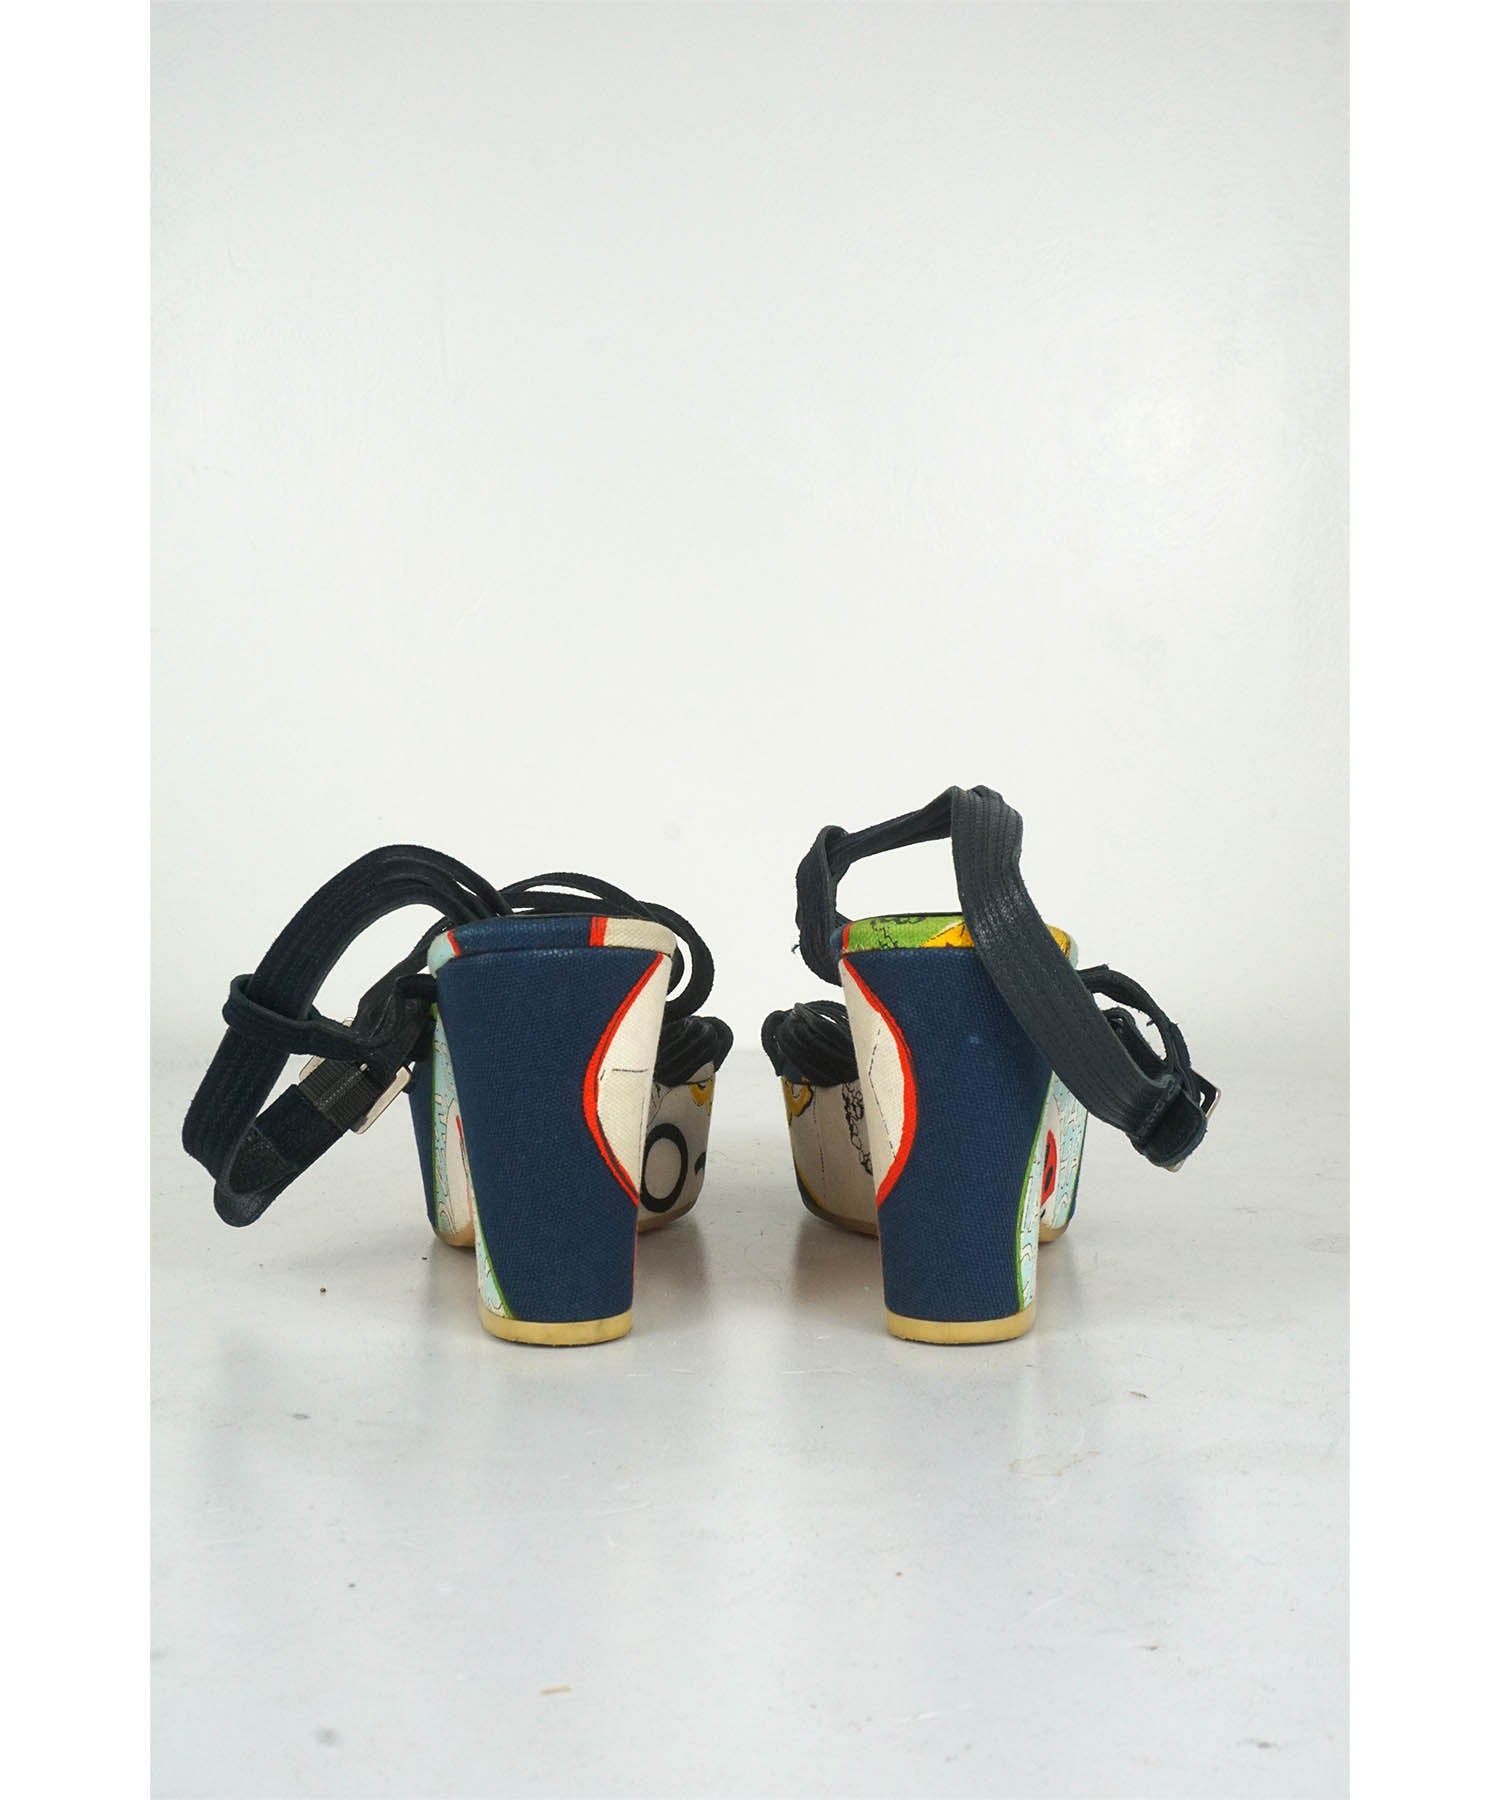 Chanel Vintage Ladybug Canvas Wedge Sandals